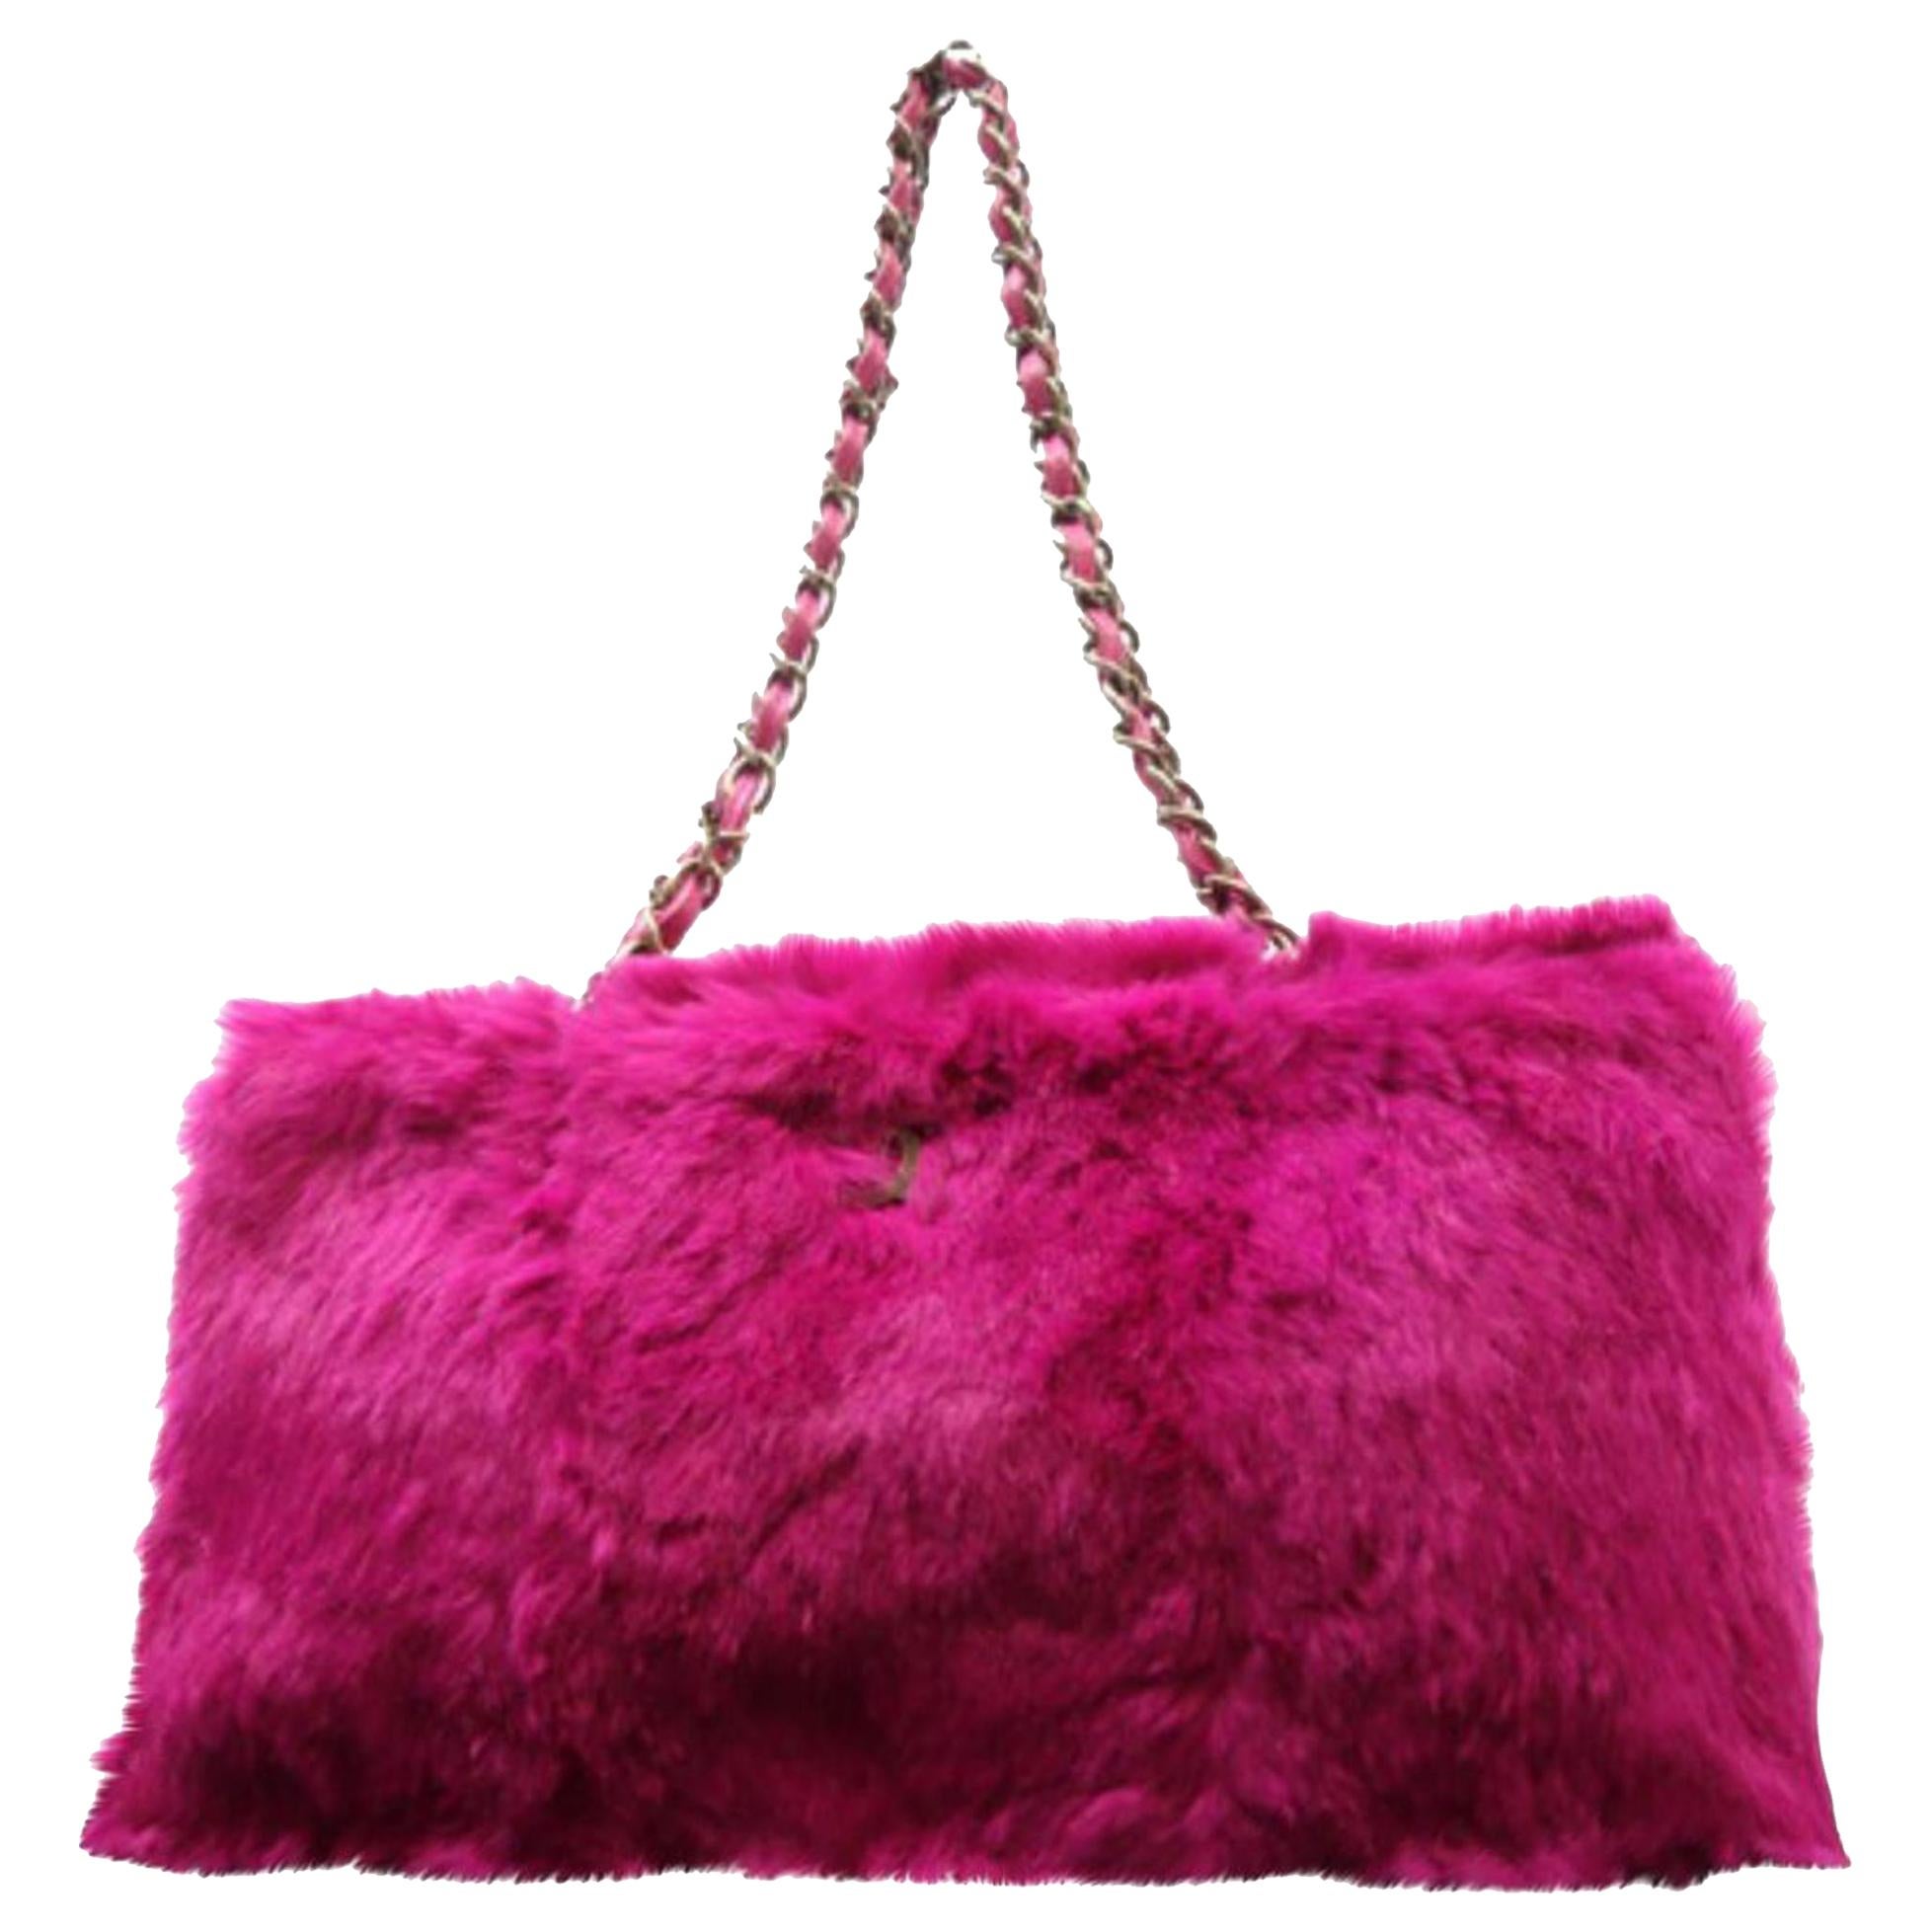 Chanel Fuchsia Chain Tote 228729 Pink Rabbit Fur Shoulder Bag For Sale ...